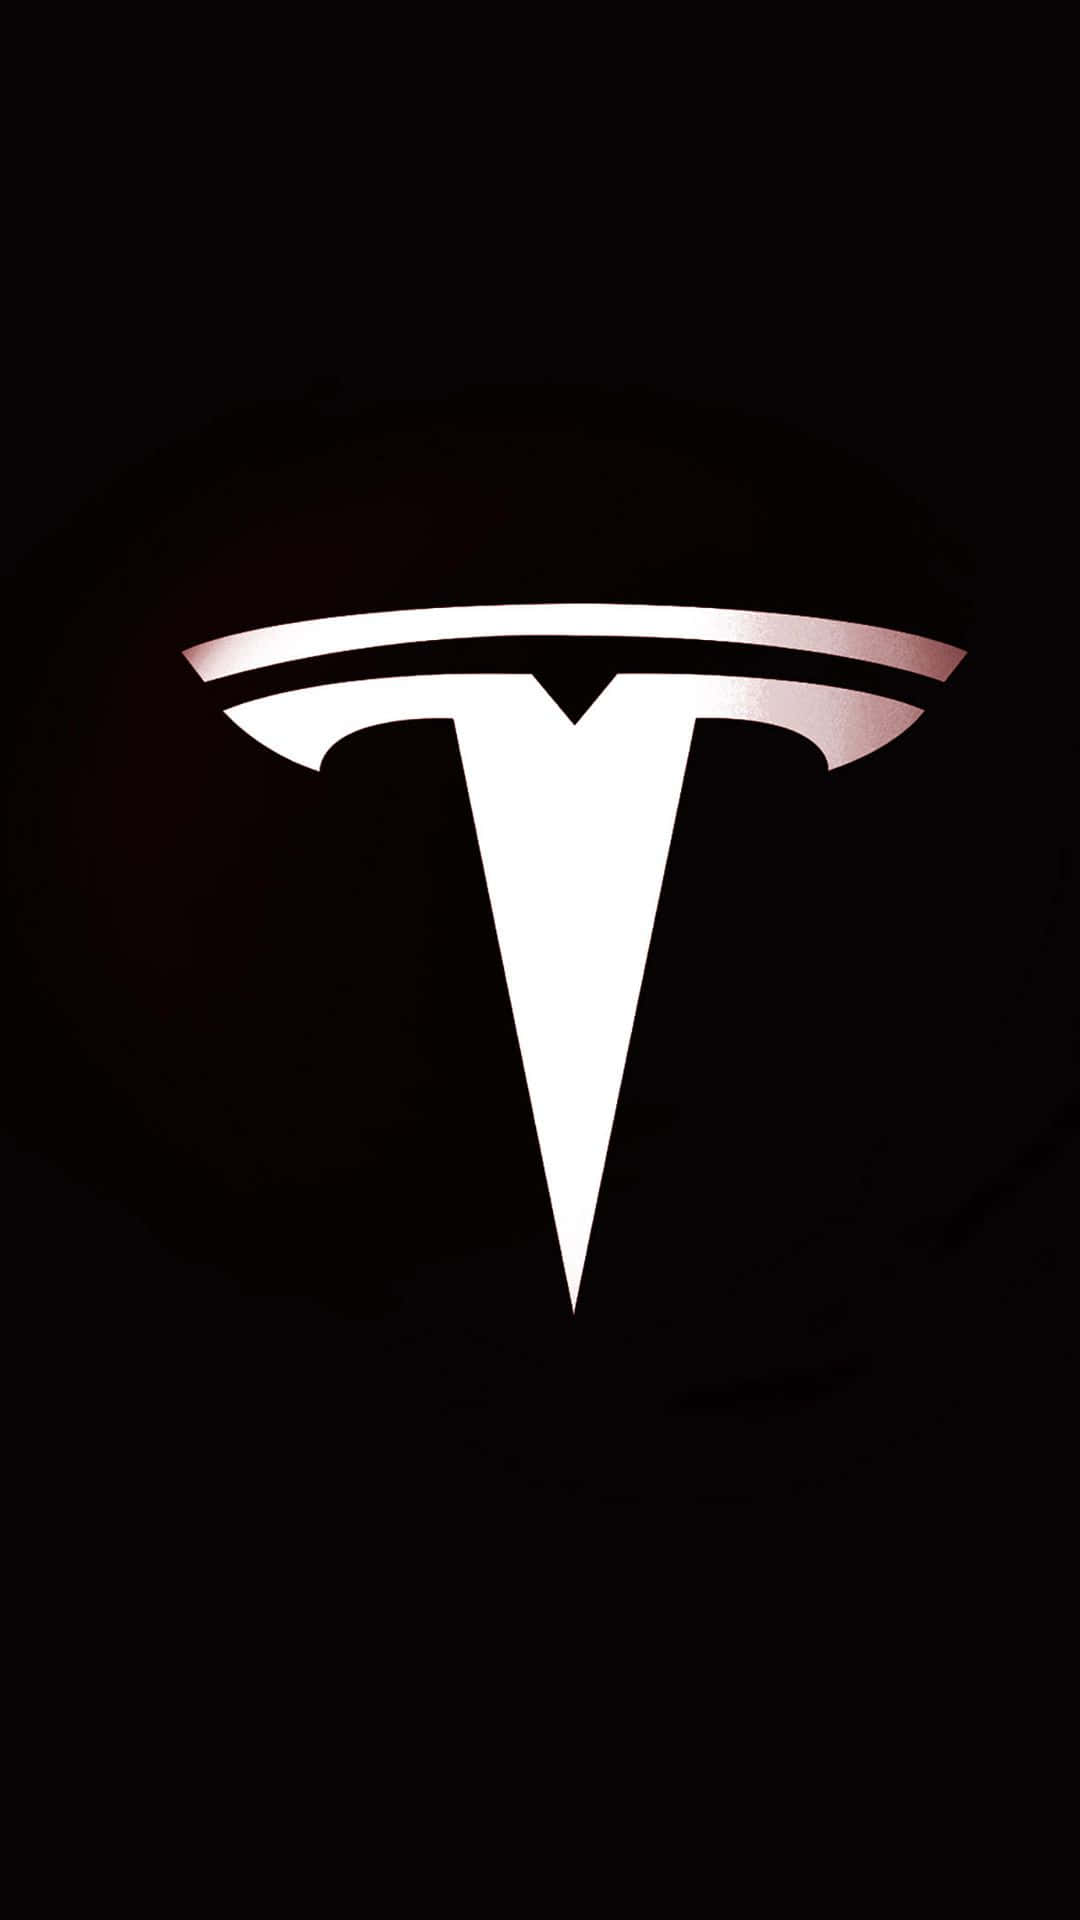 Teslalogo Iphone Wallpaper